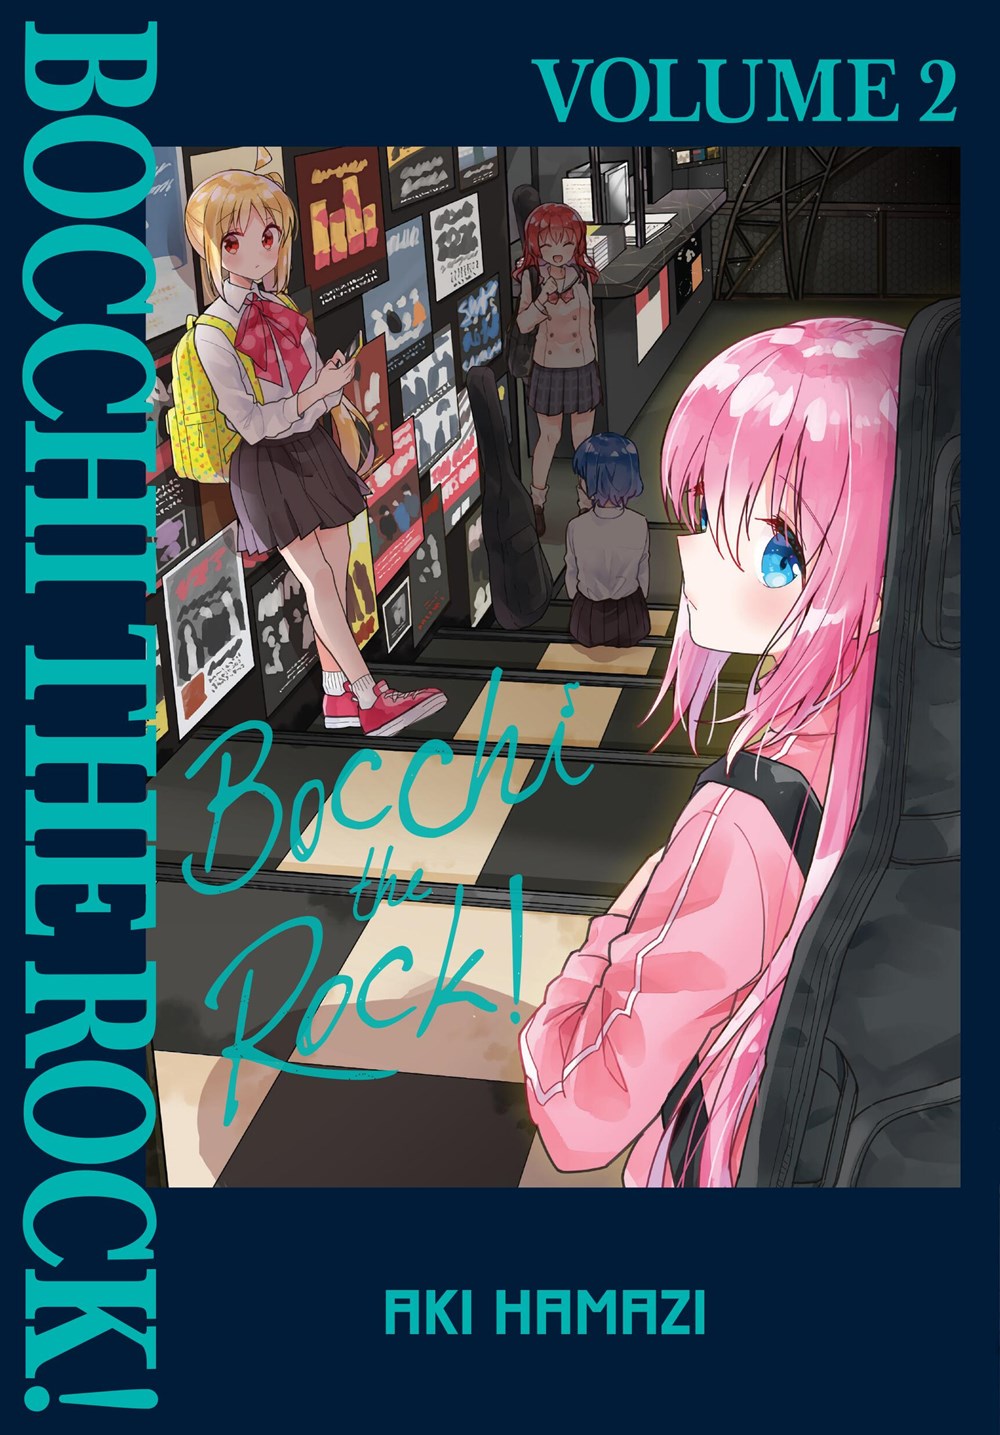 Bocchi the Rock manga now has reached 2 million copies circulation